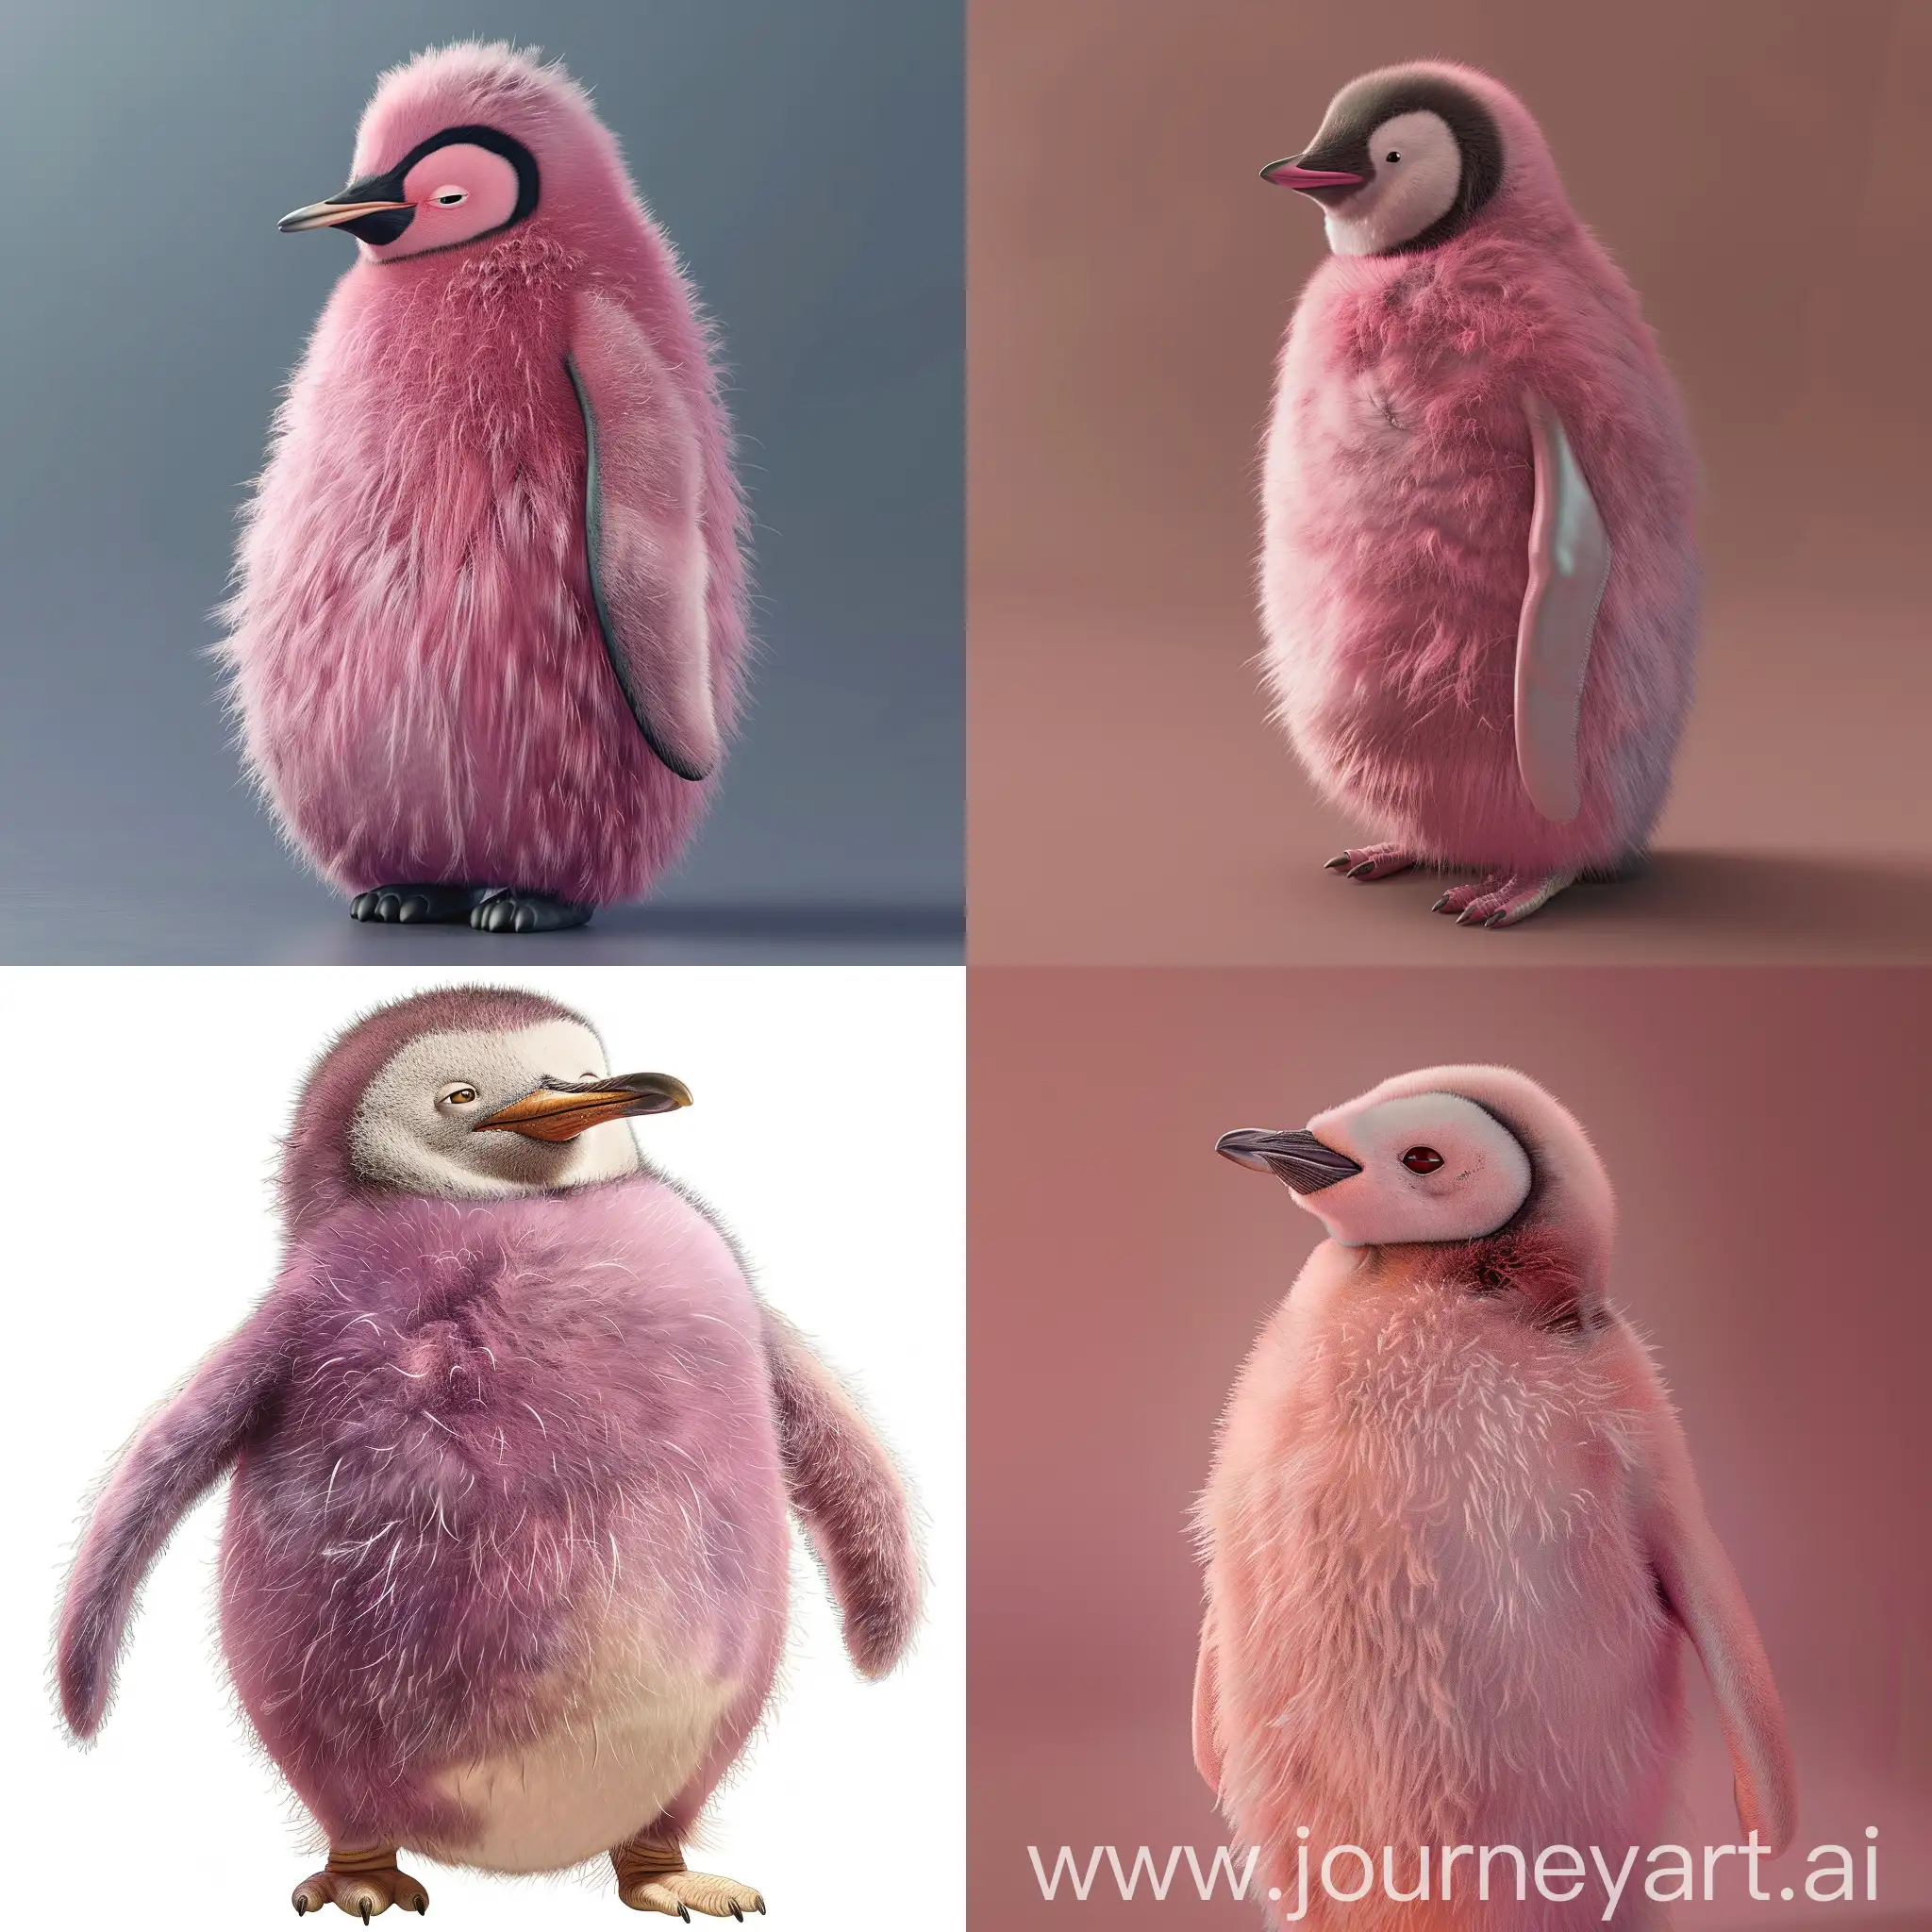 Imagen referencia furry antropomórfica pingüino rosa